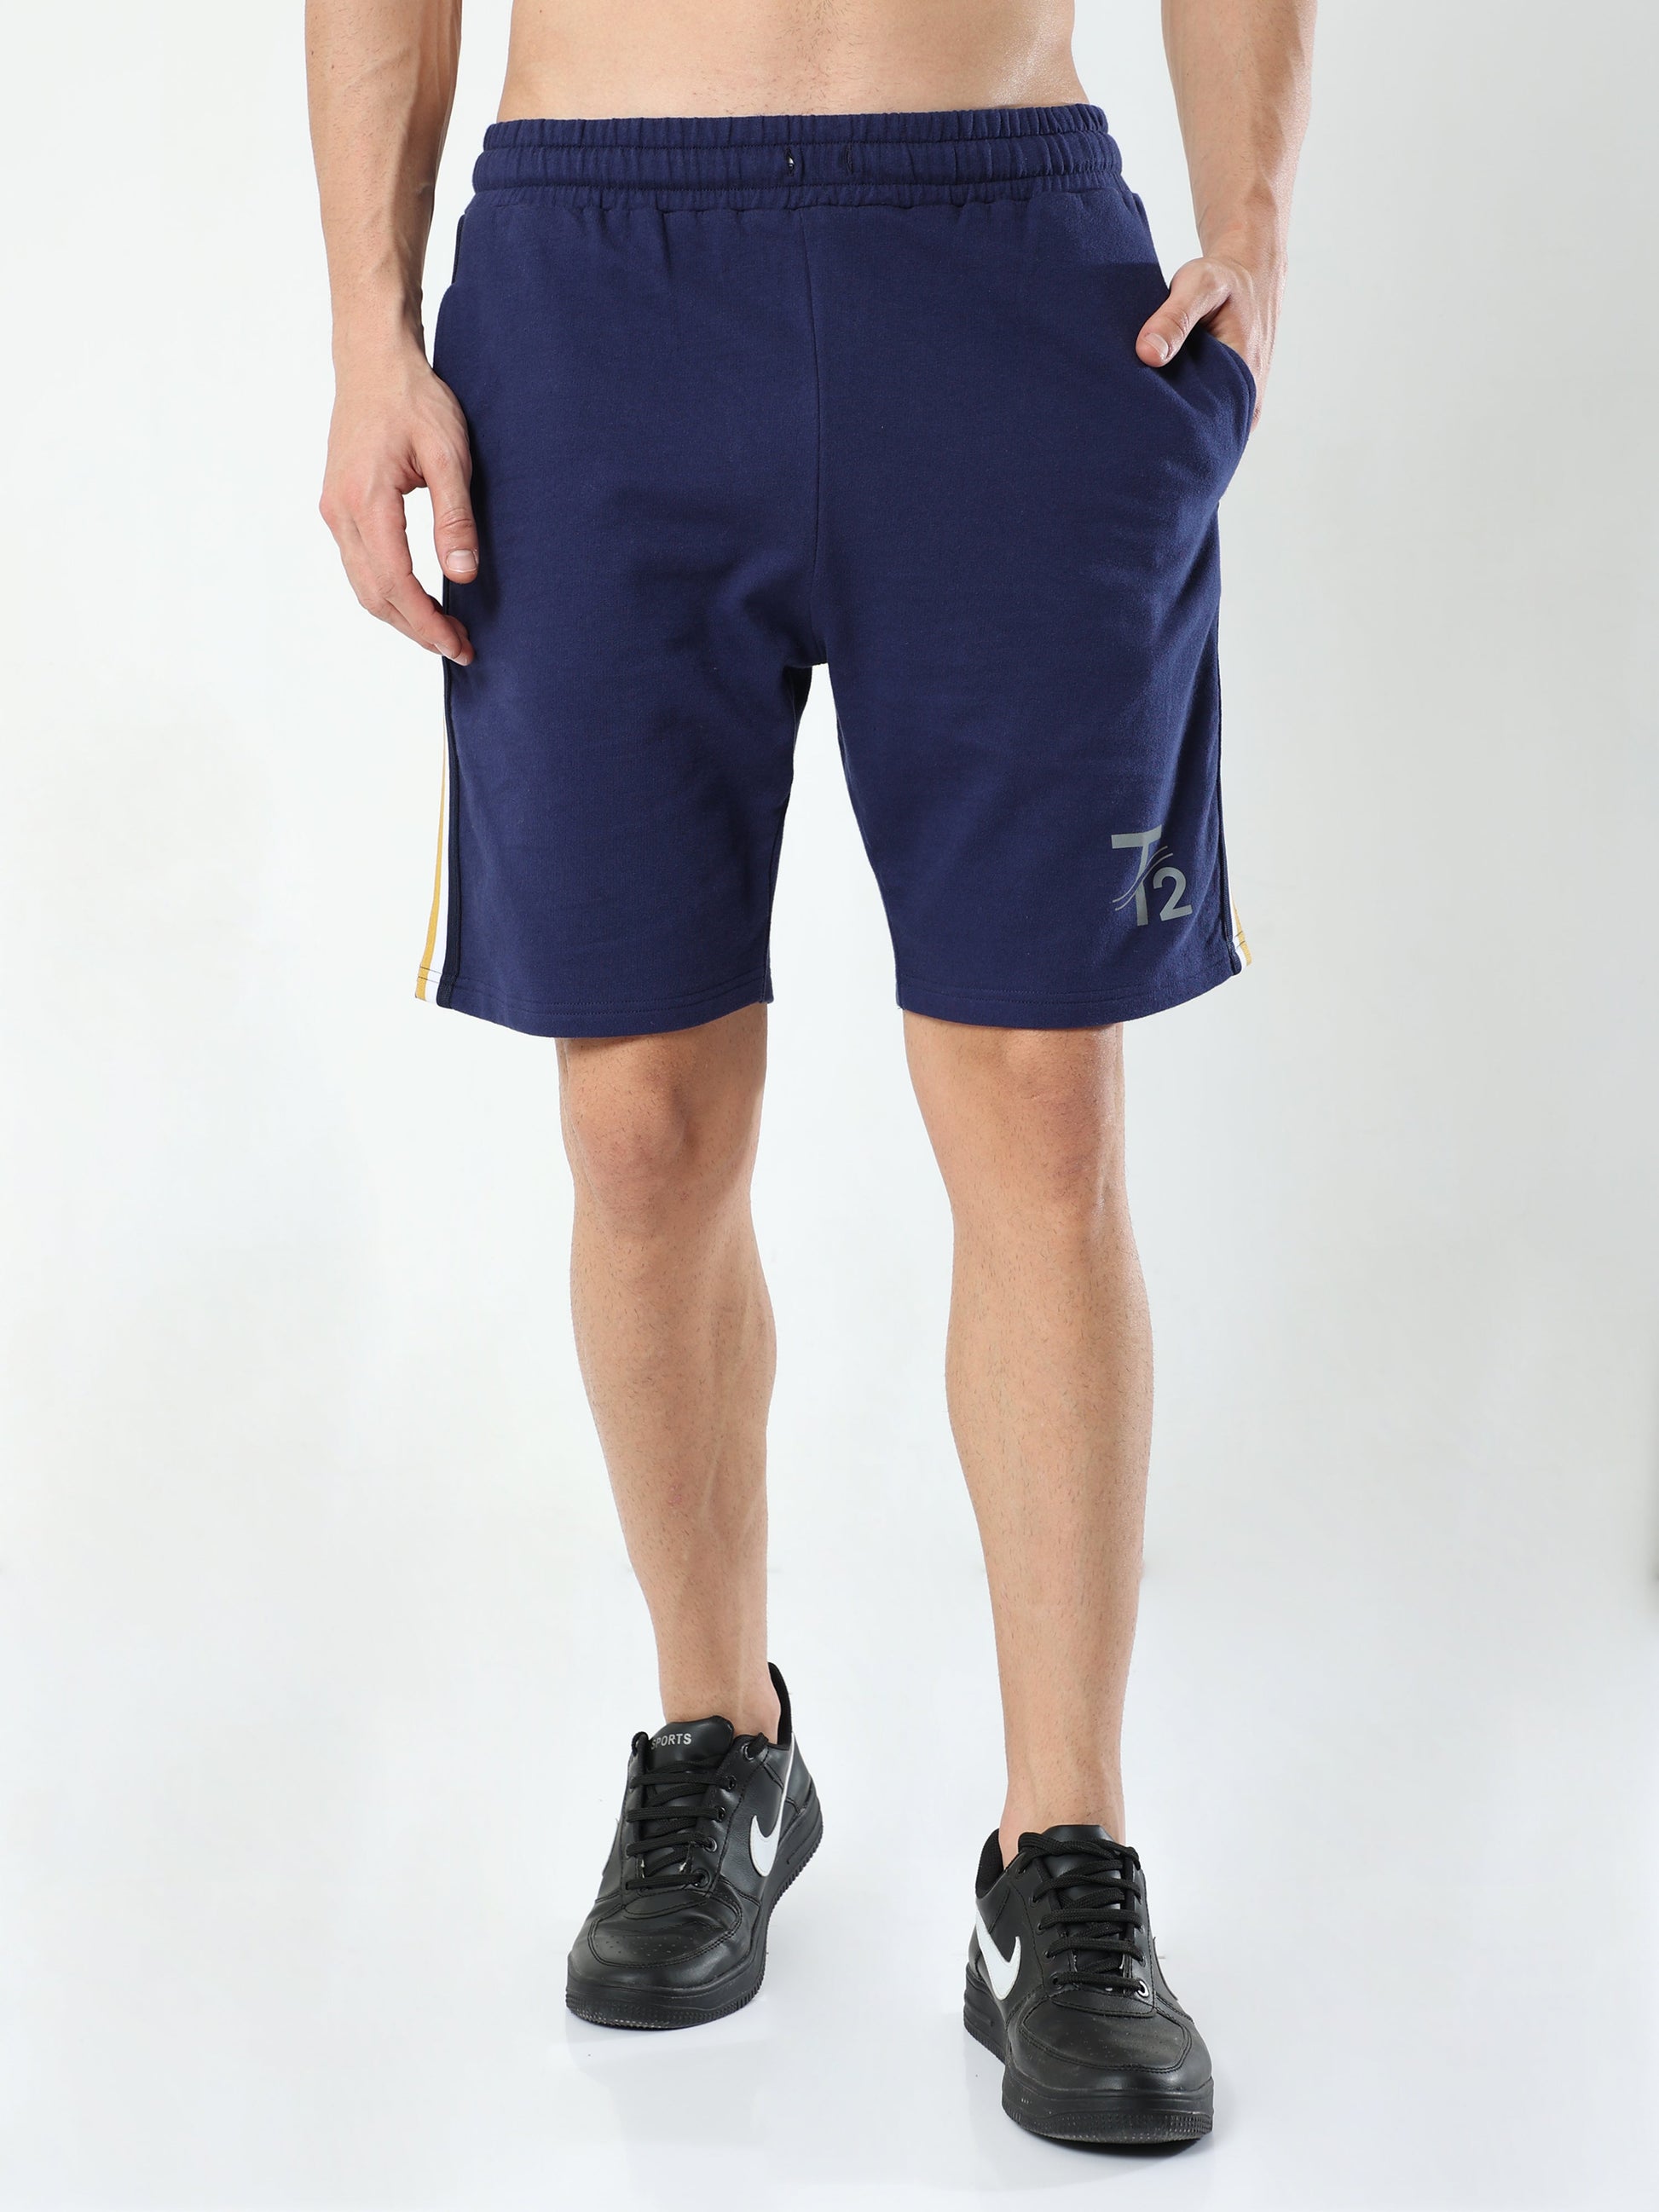 Comfy Cotton - Men's Casual Shorts : Navy